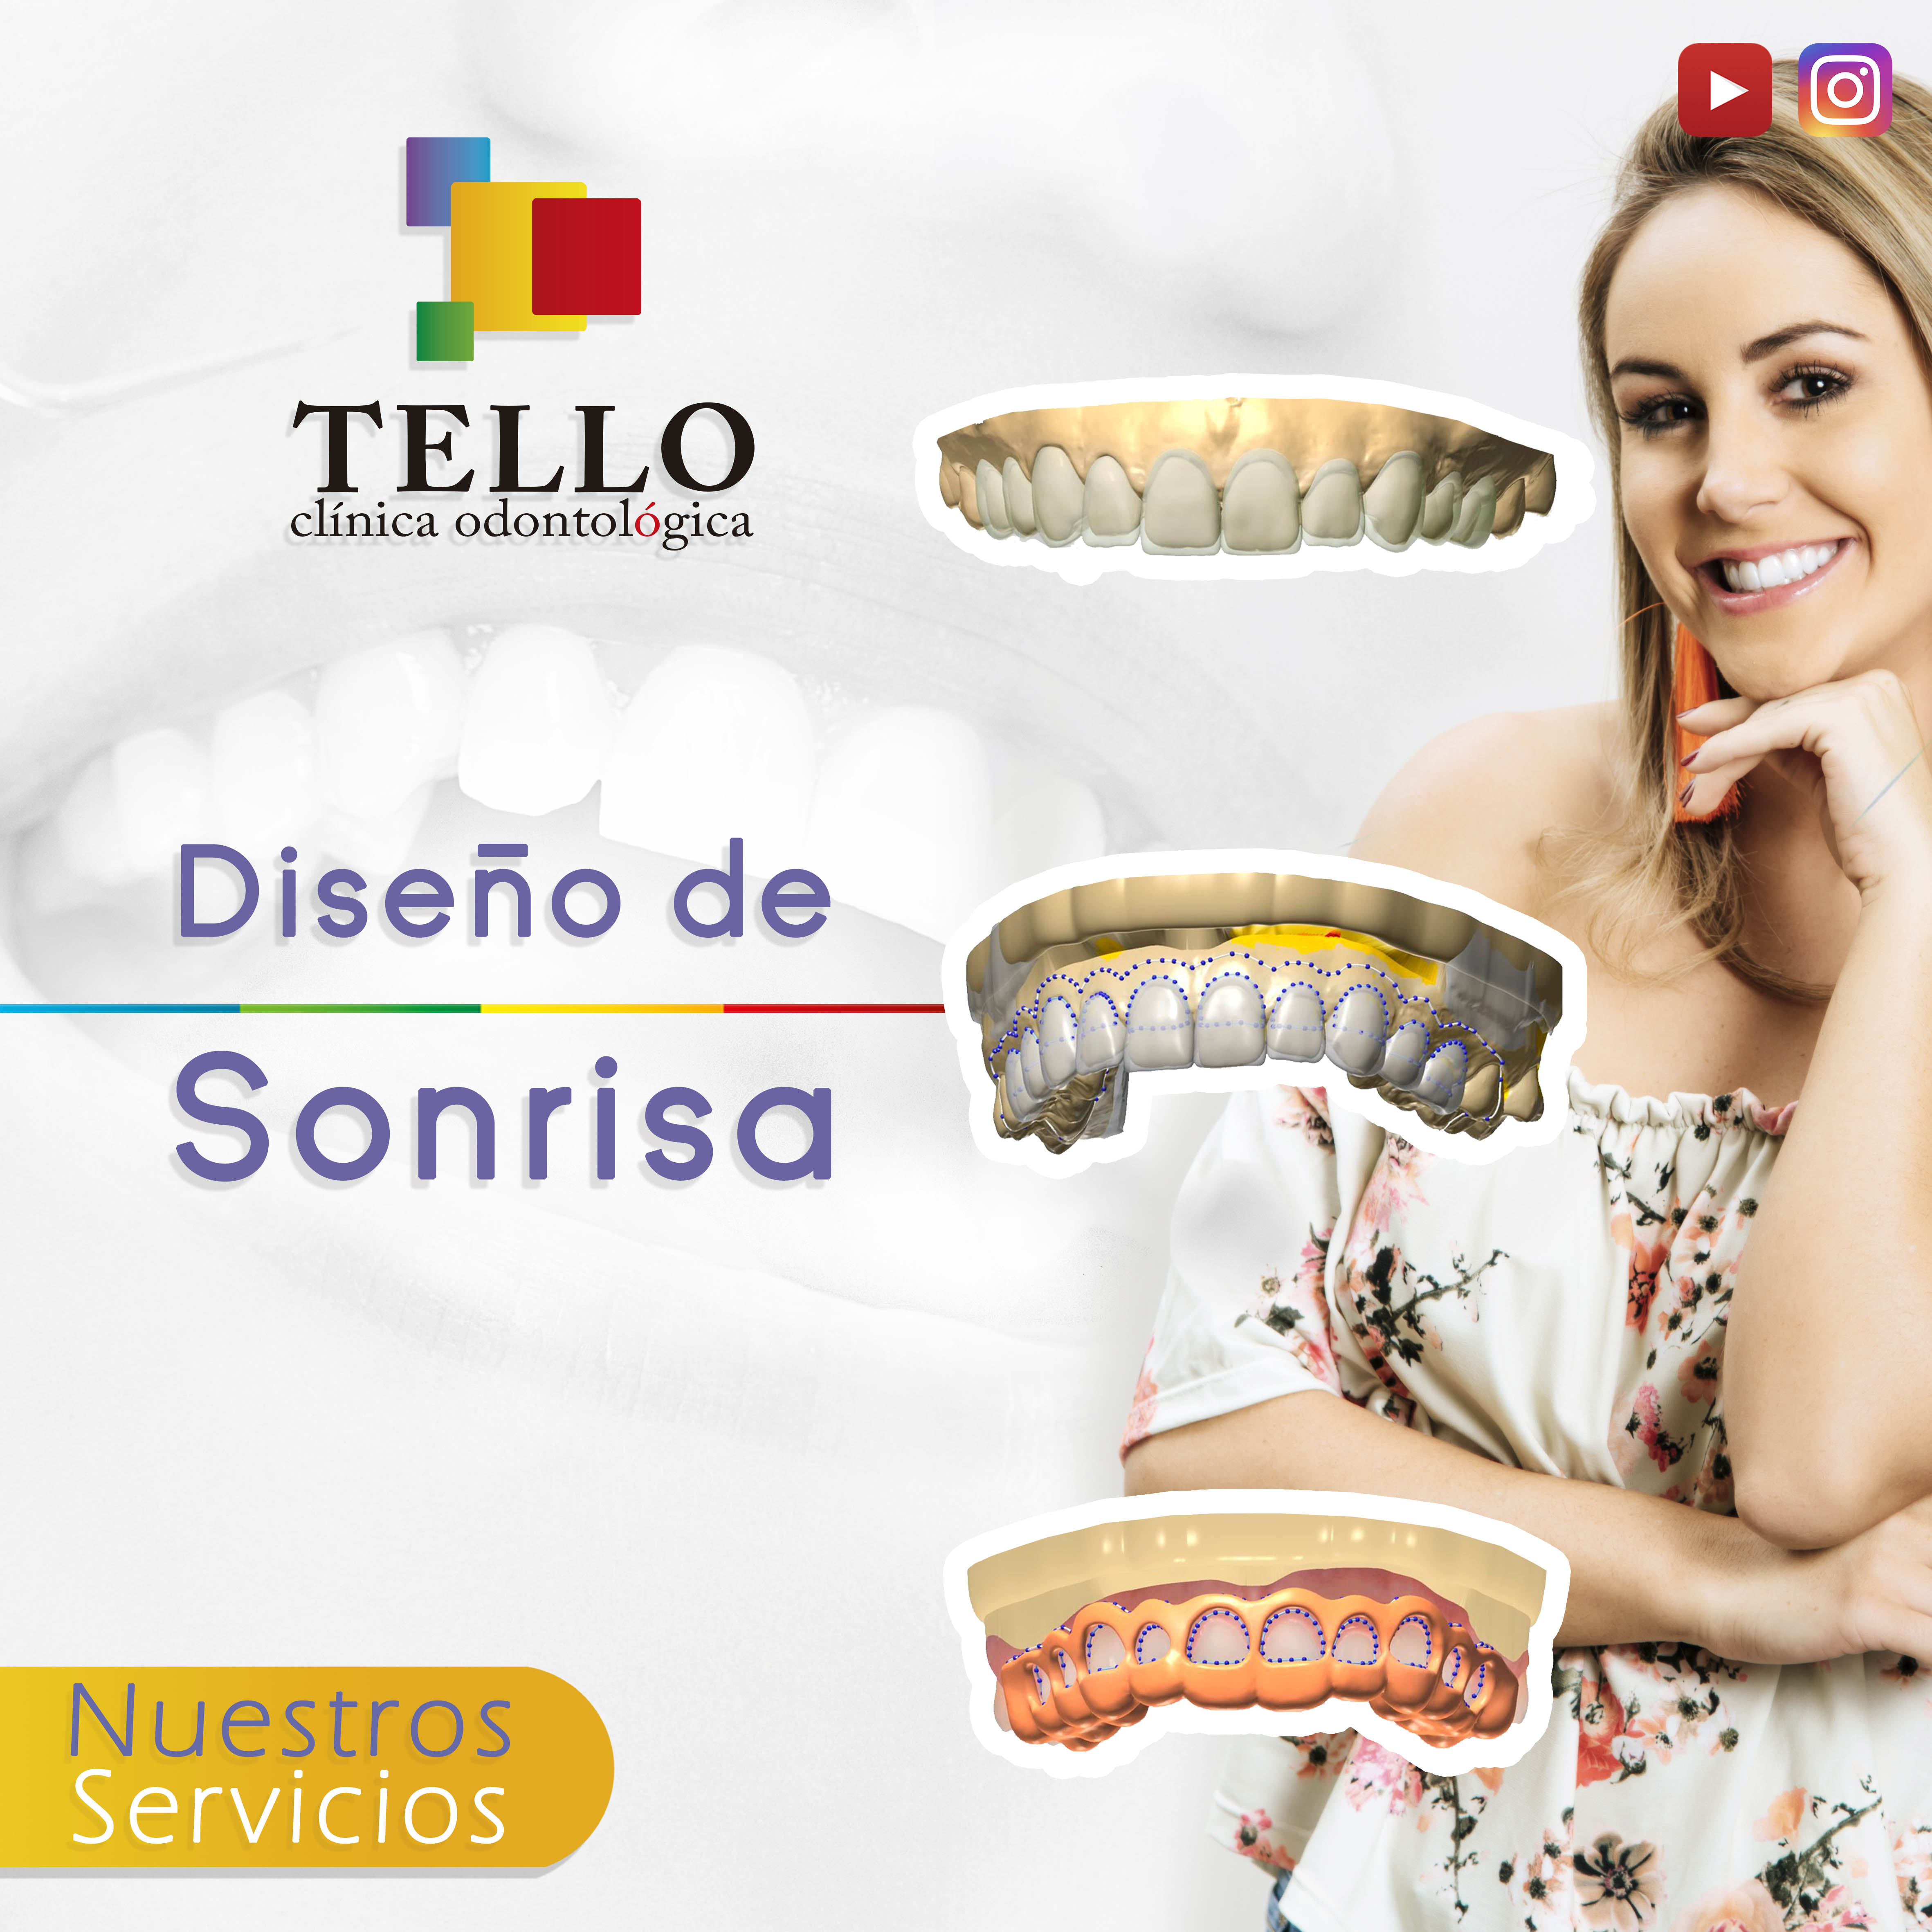 Diseño de sonrisa y armonización Tello Odontología Cochabamba